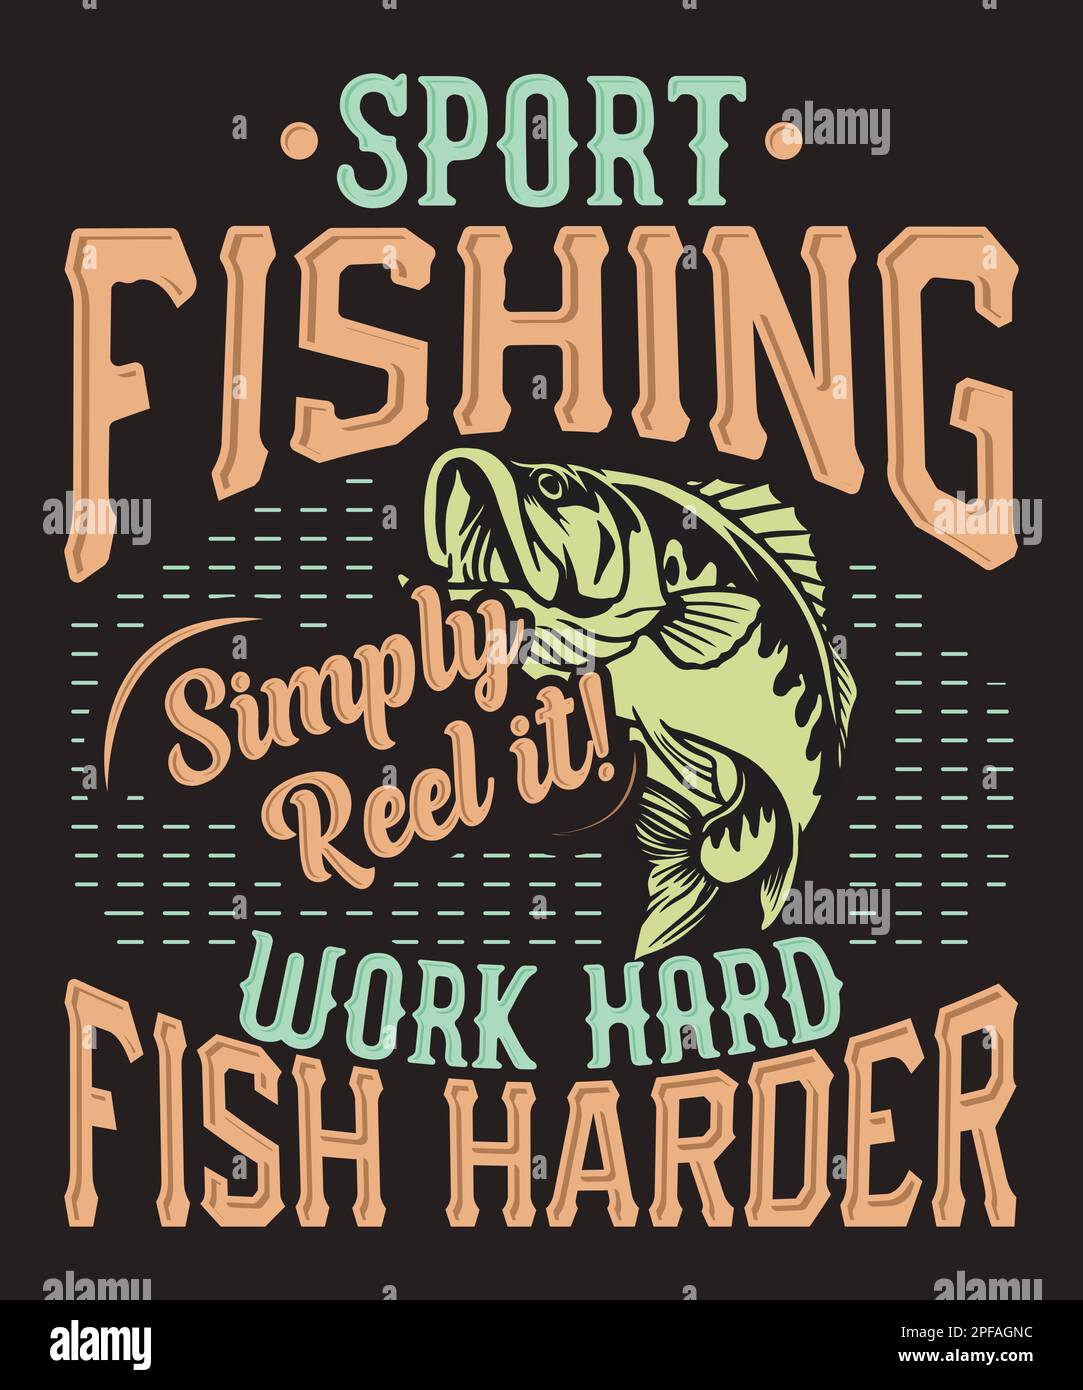 https://c8.alamy.com/comp/2PFAGNC/sport-fishing-simply-reel-it!-work-hard-fish-harder-fishing-t-shirt-design-2PFAGNC.jpg